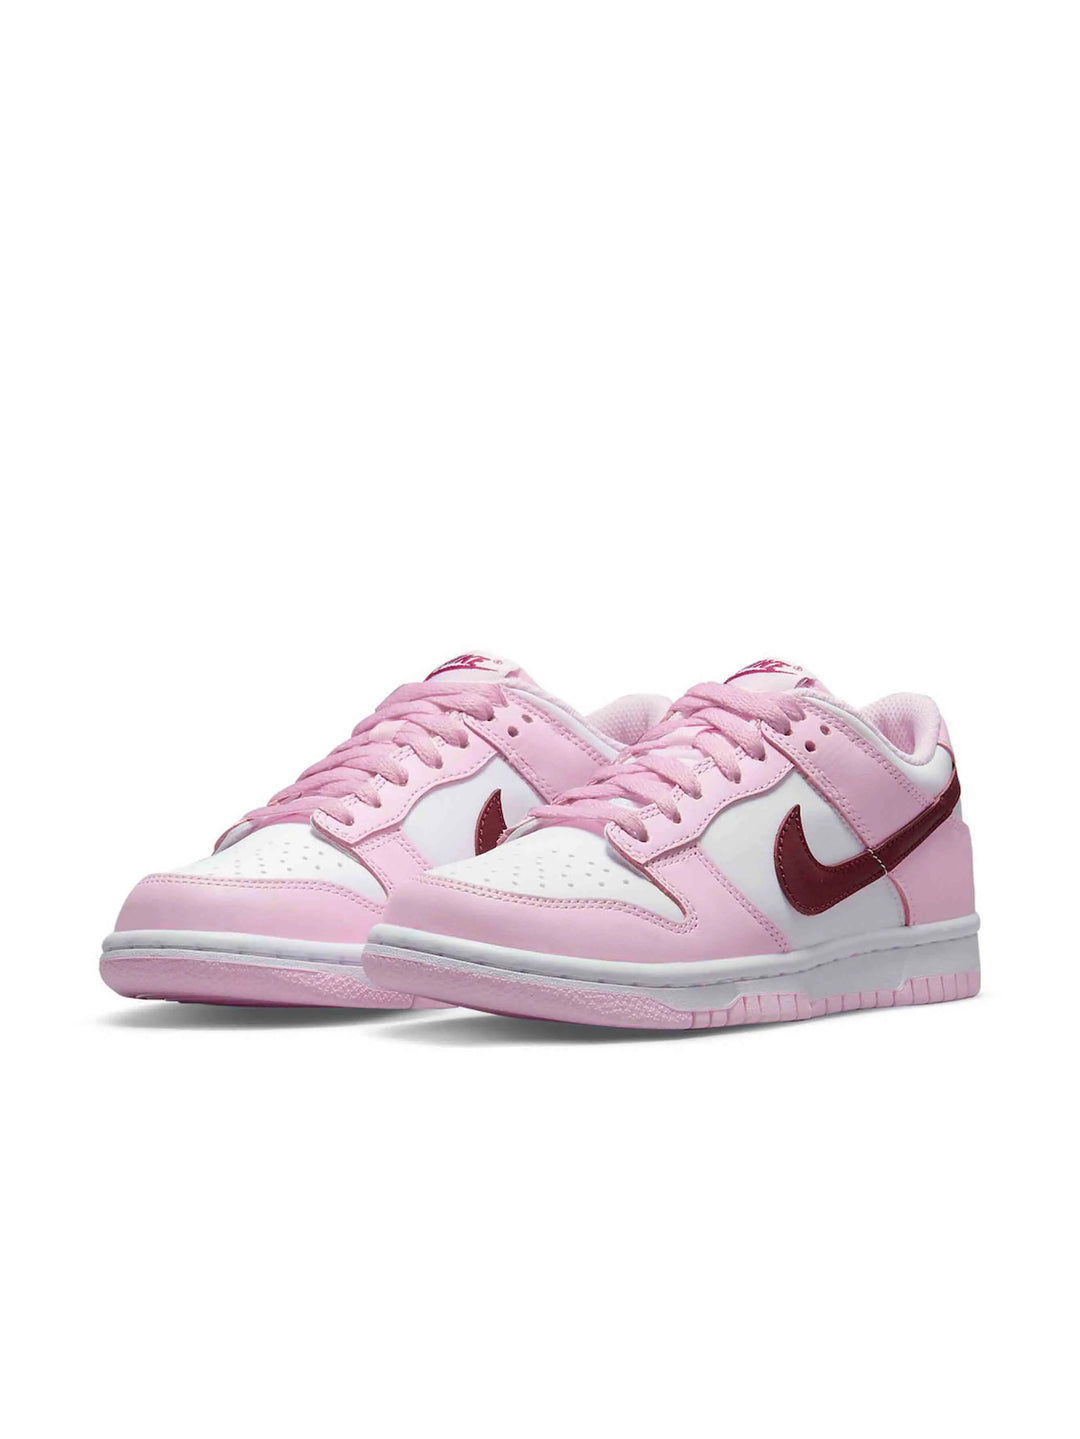 Nike Dunk Low Pink Foam (2021) Prior